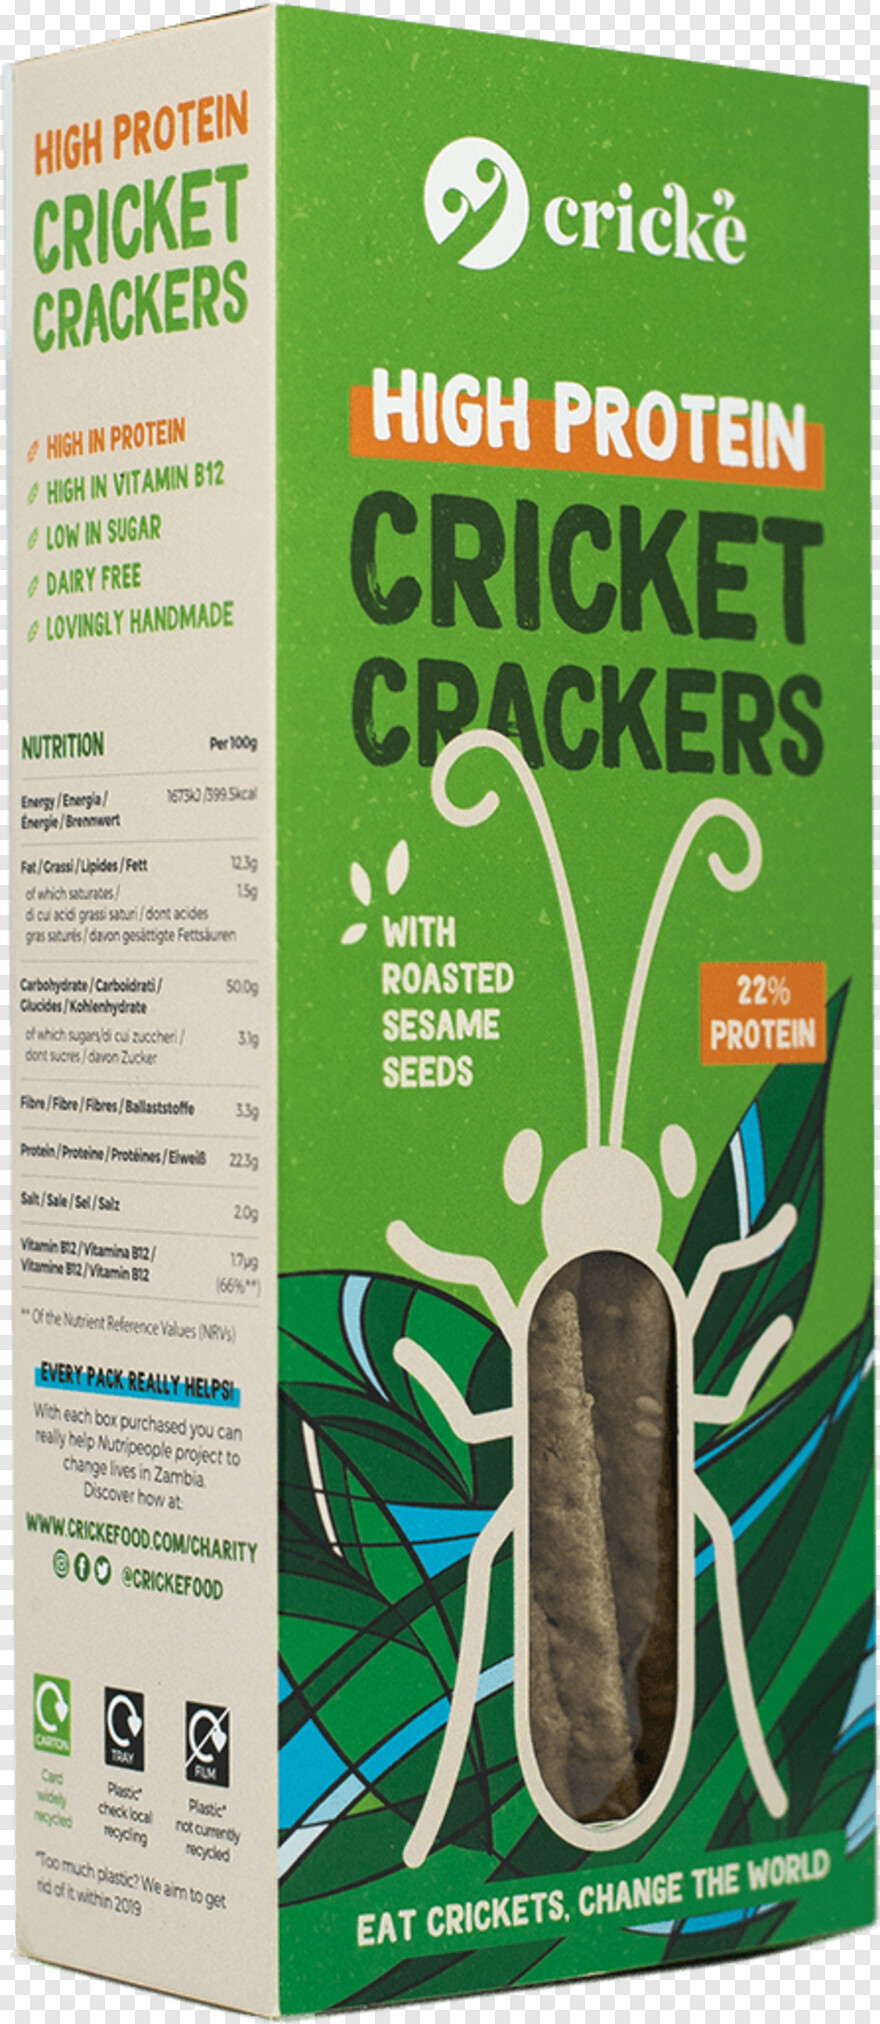  Cricket Clipart, Cricket Images, Cricket Cup, Cricket Kit, Cricket Vector, Cricket Bat And Ball